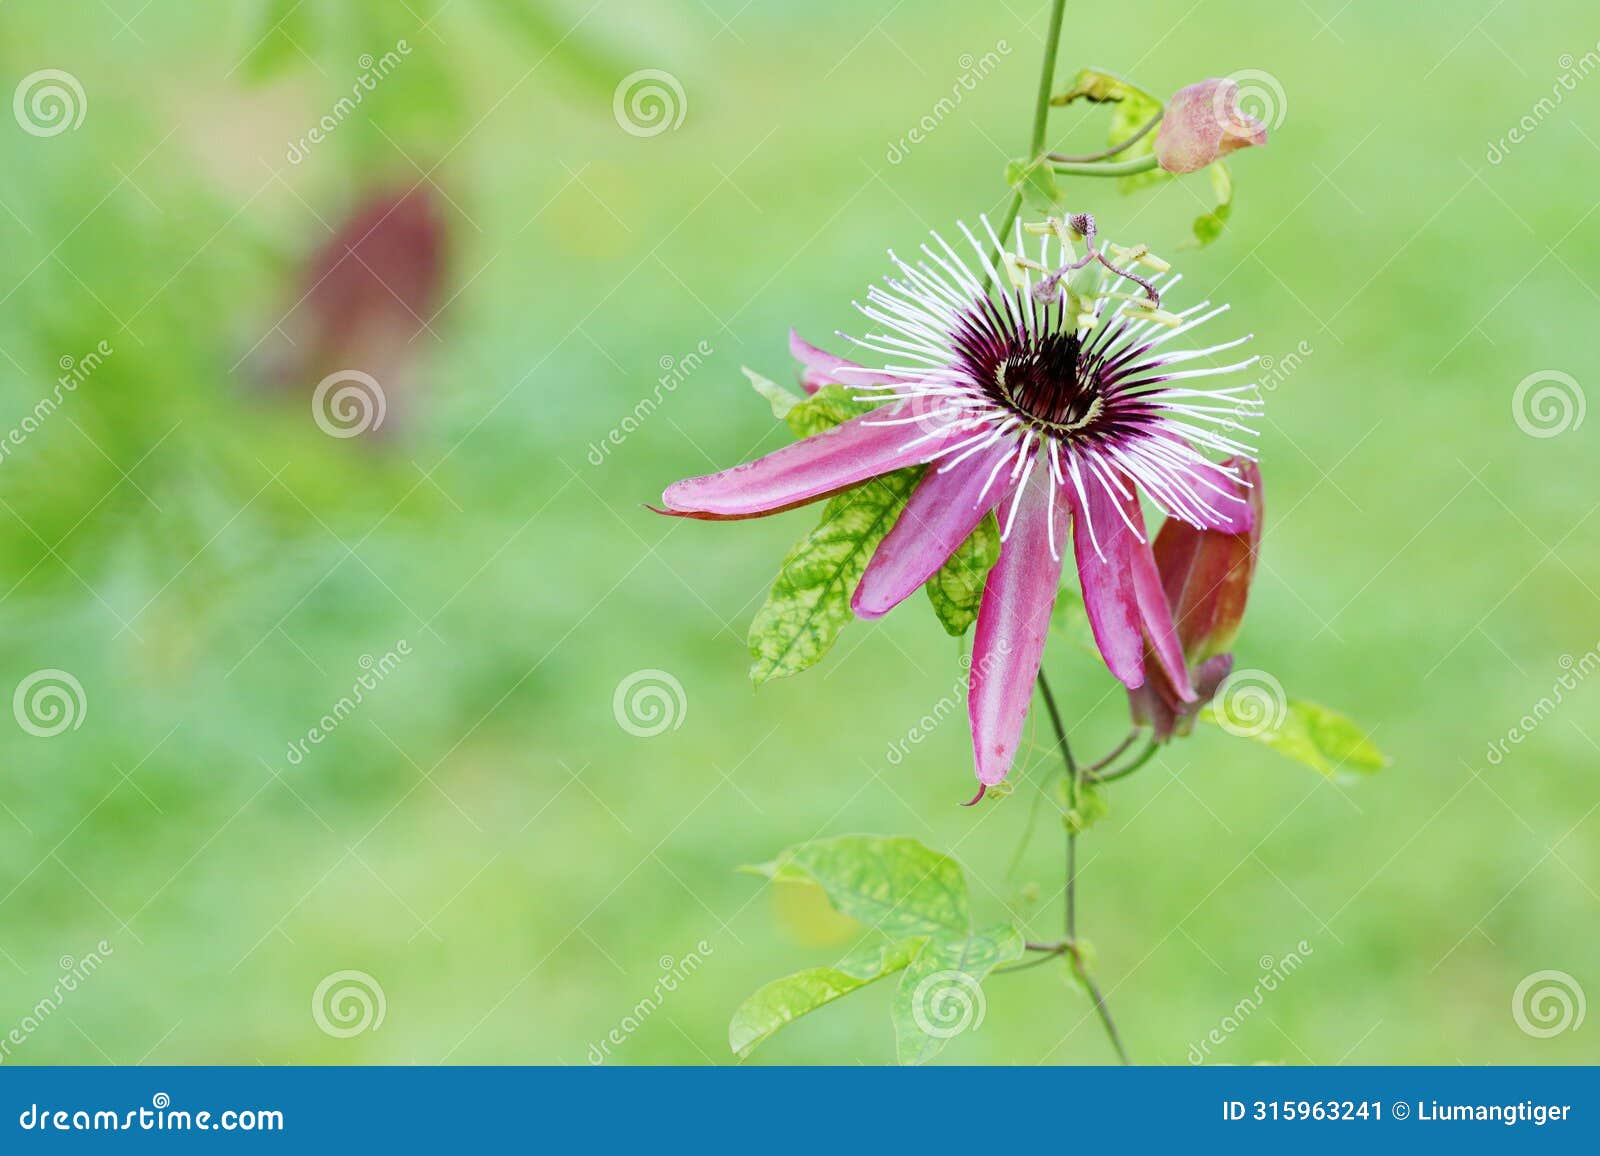 the flower and bud of passiflora caerulea